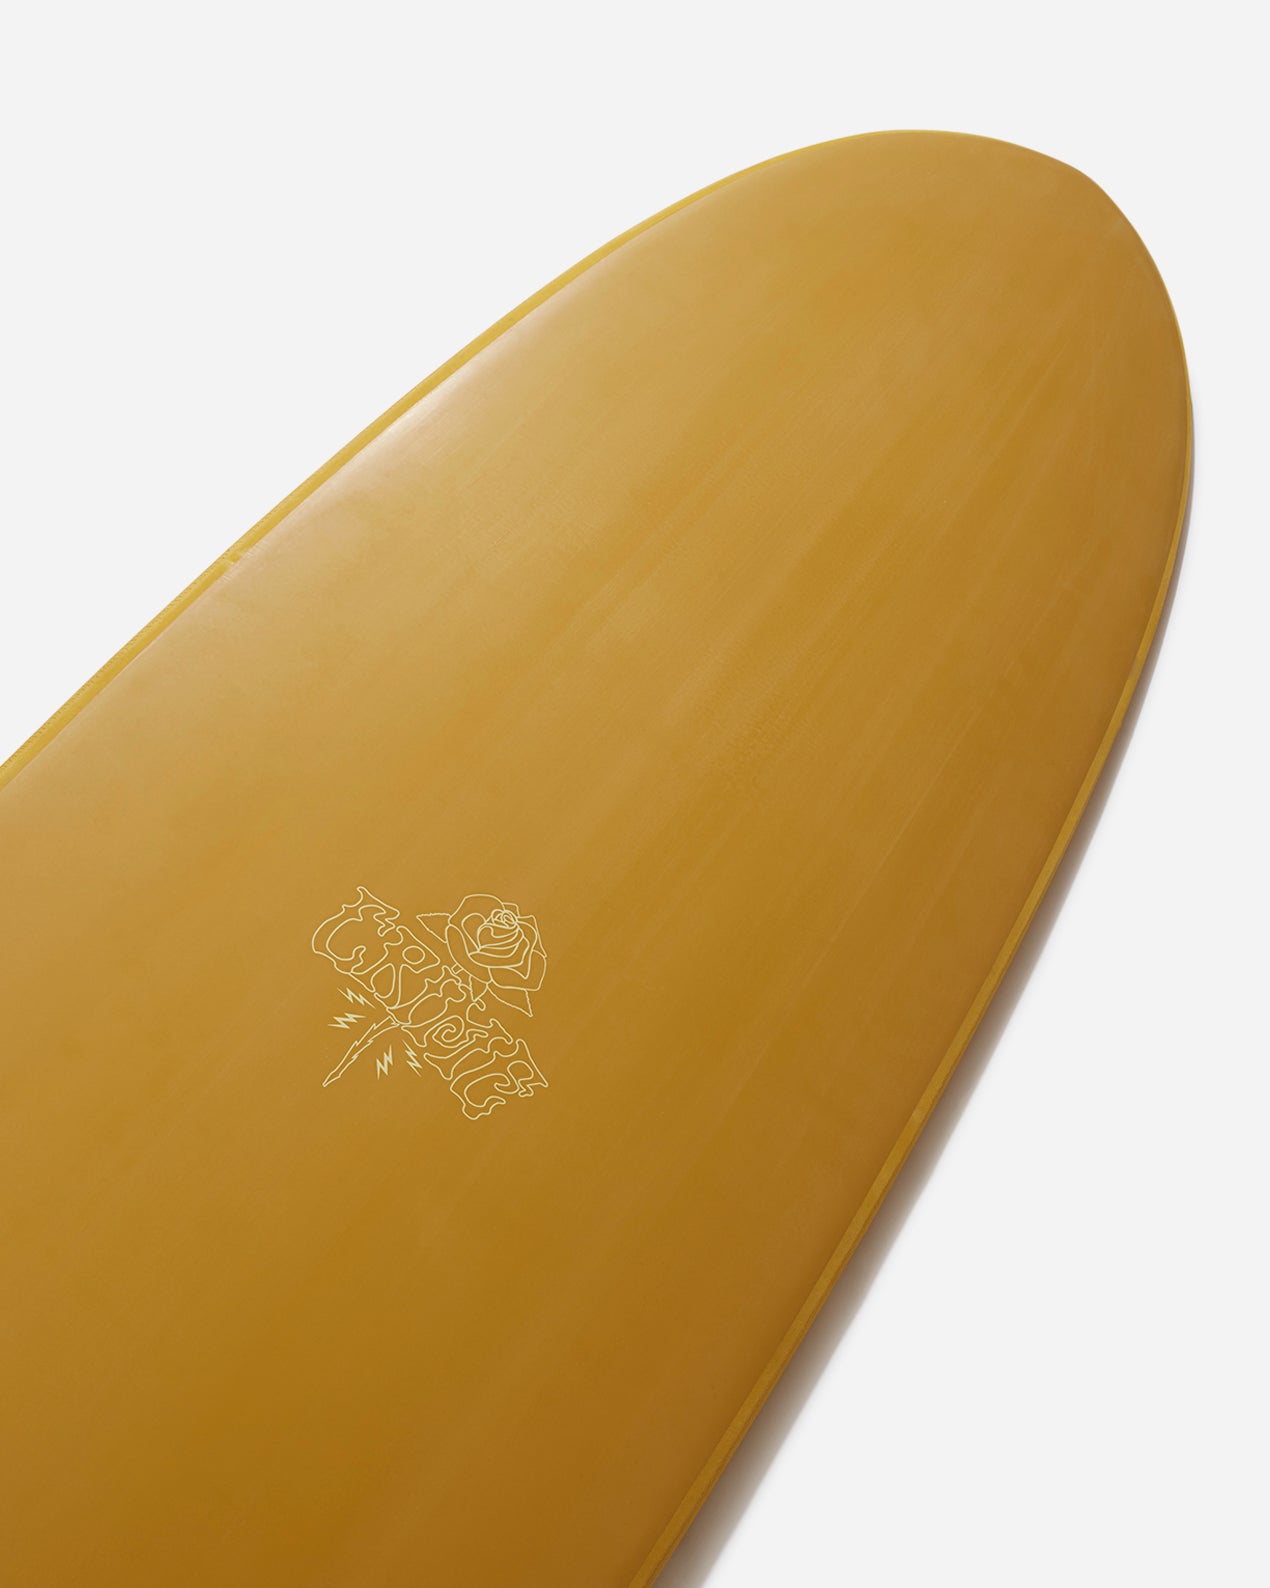 Crime Glider Surfboard 10'1